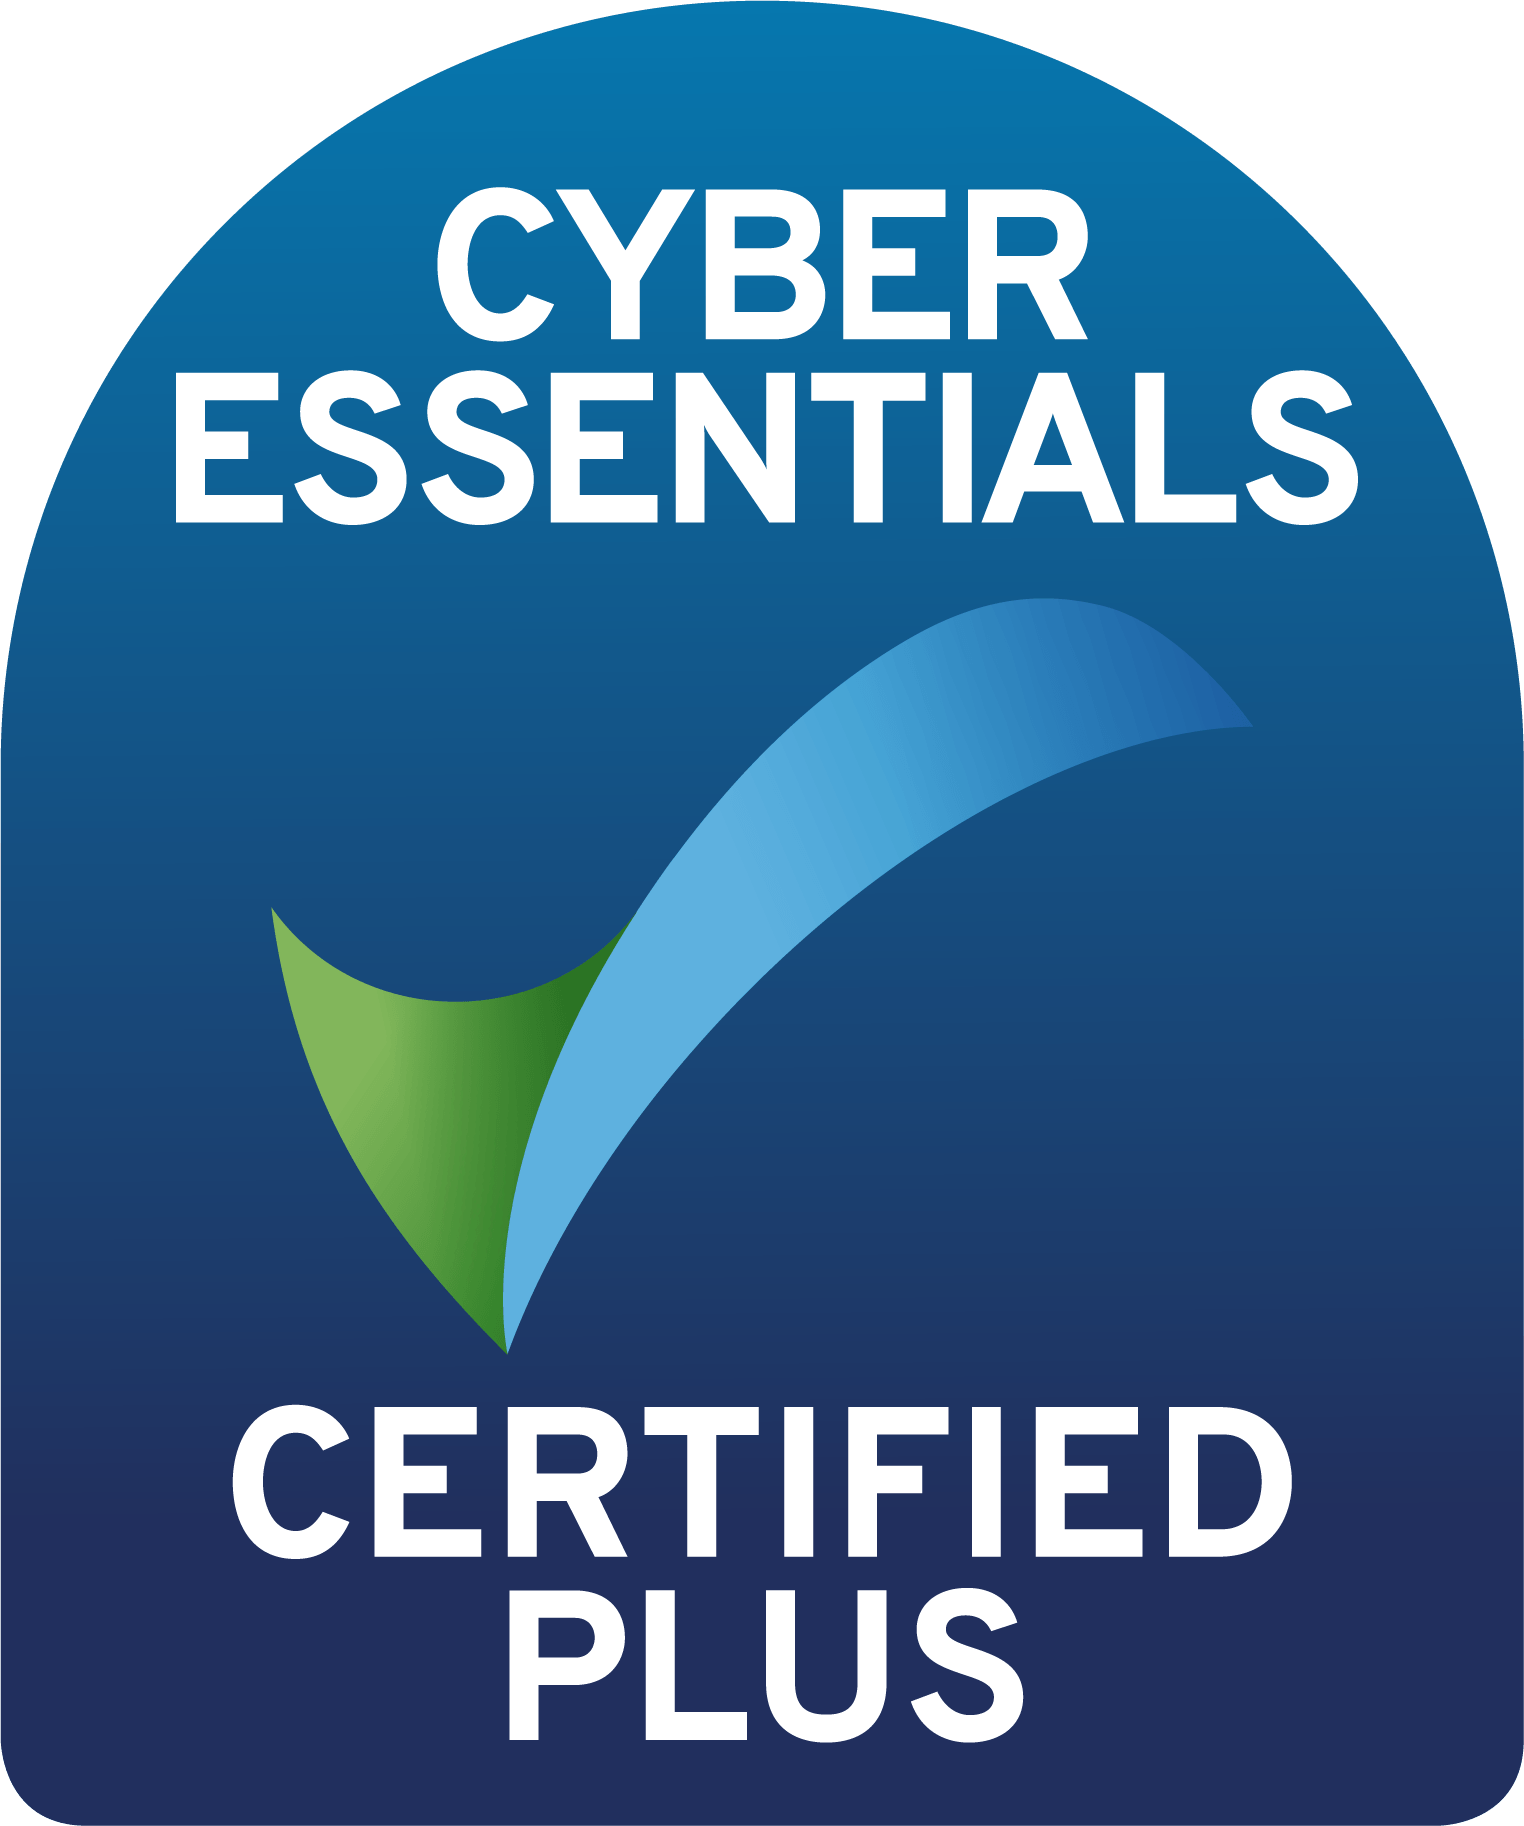 cyber essentials certification mark plus logo